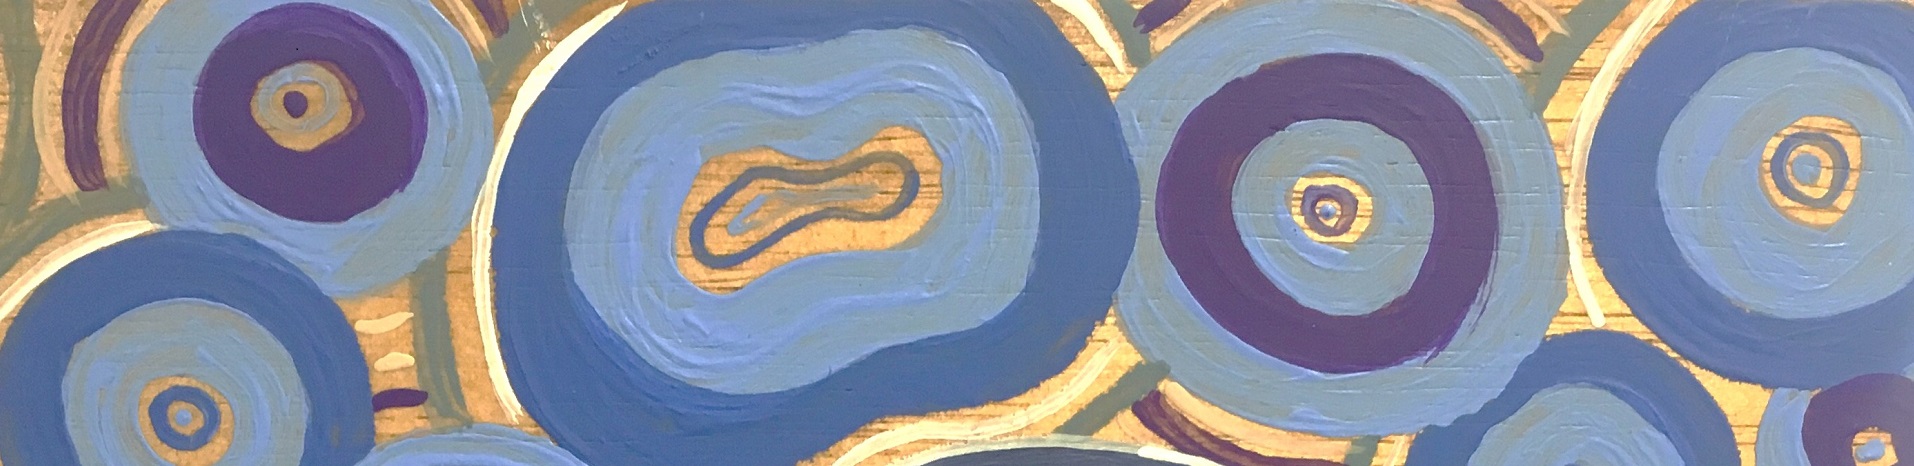 Blue and yellow Aboriginal artwork showing linking circles 